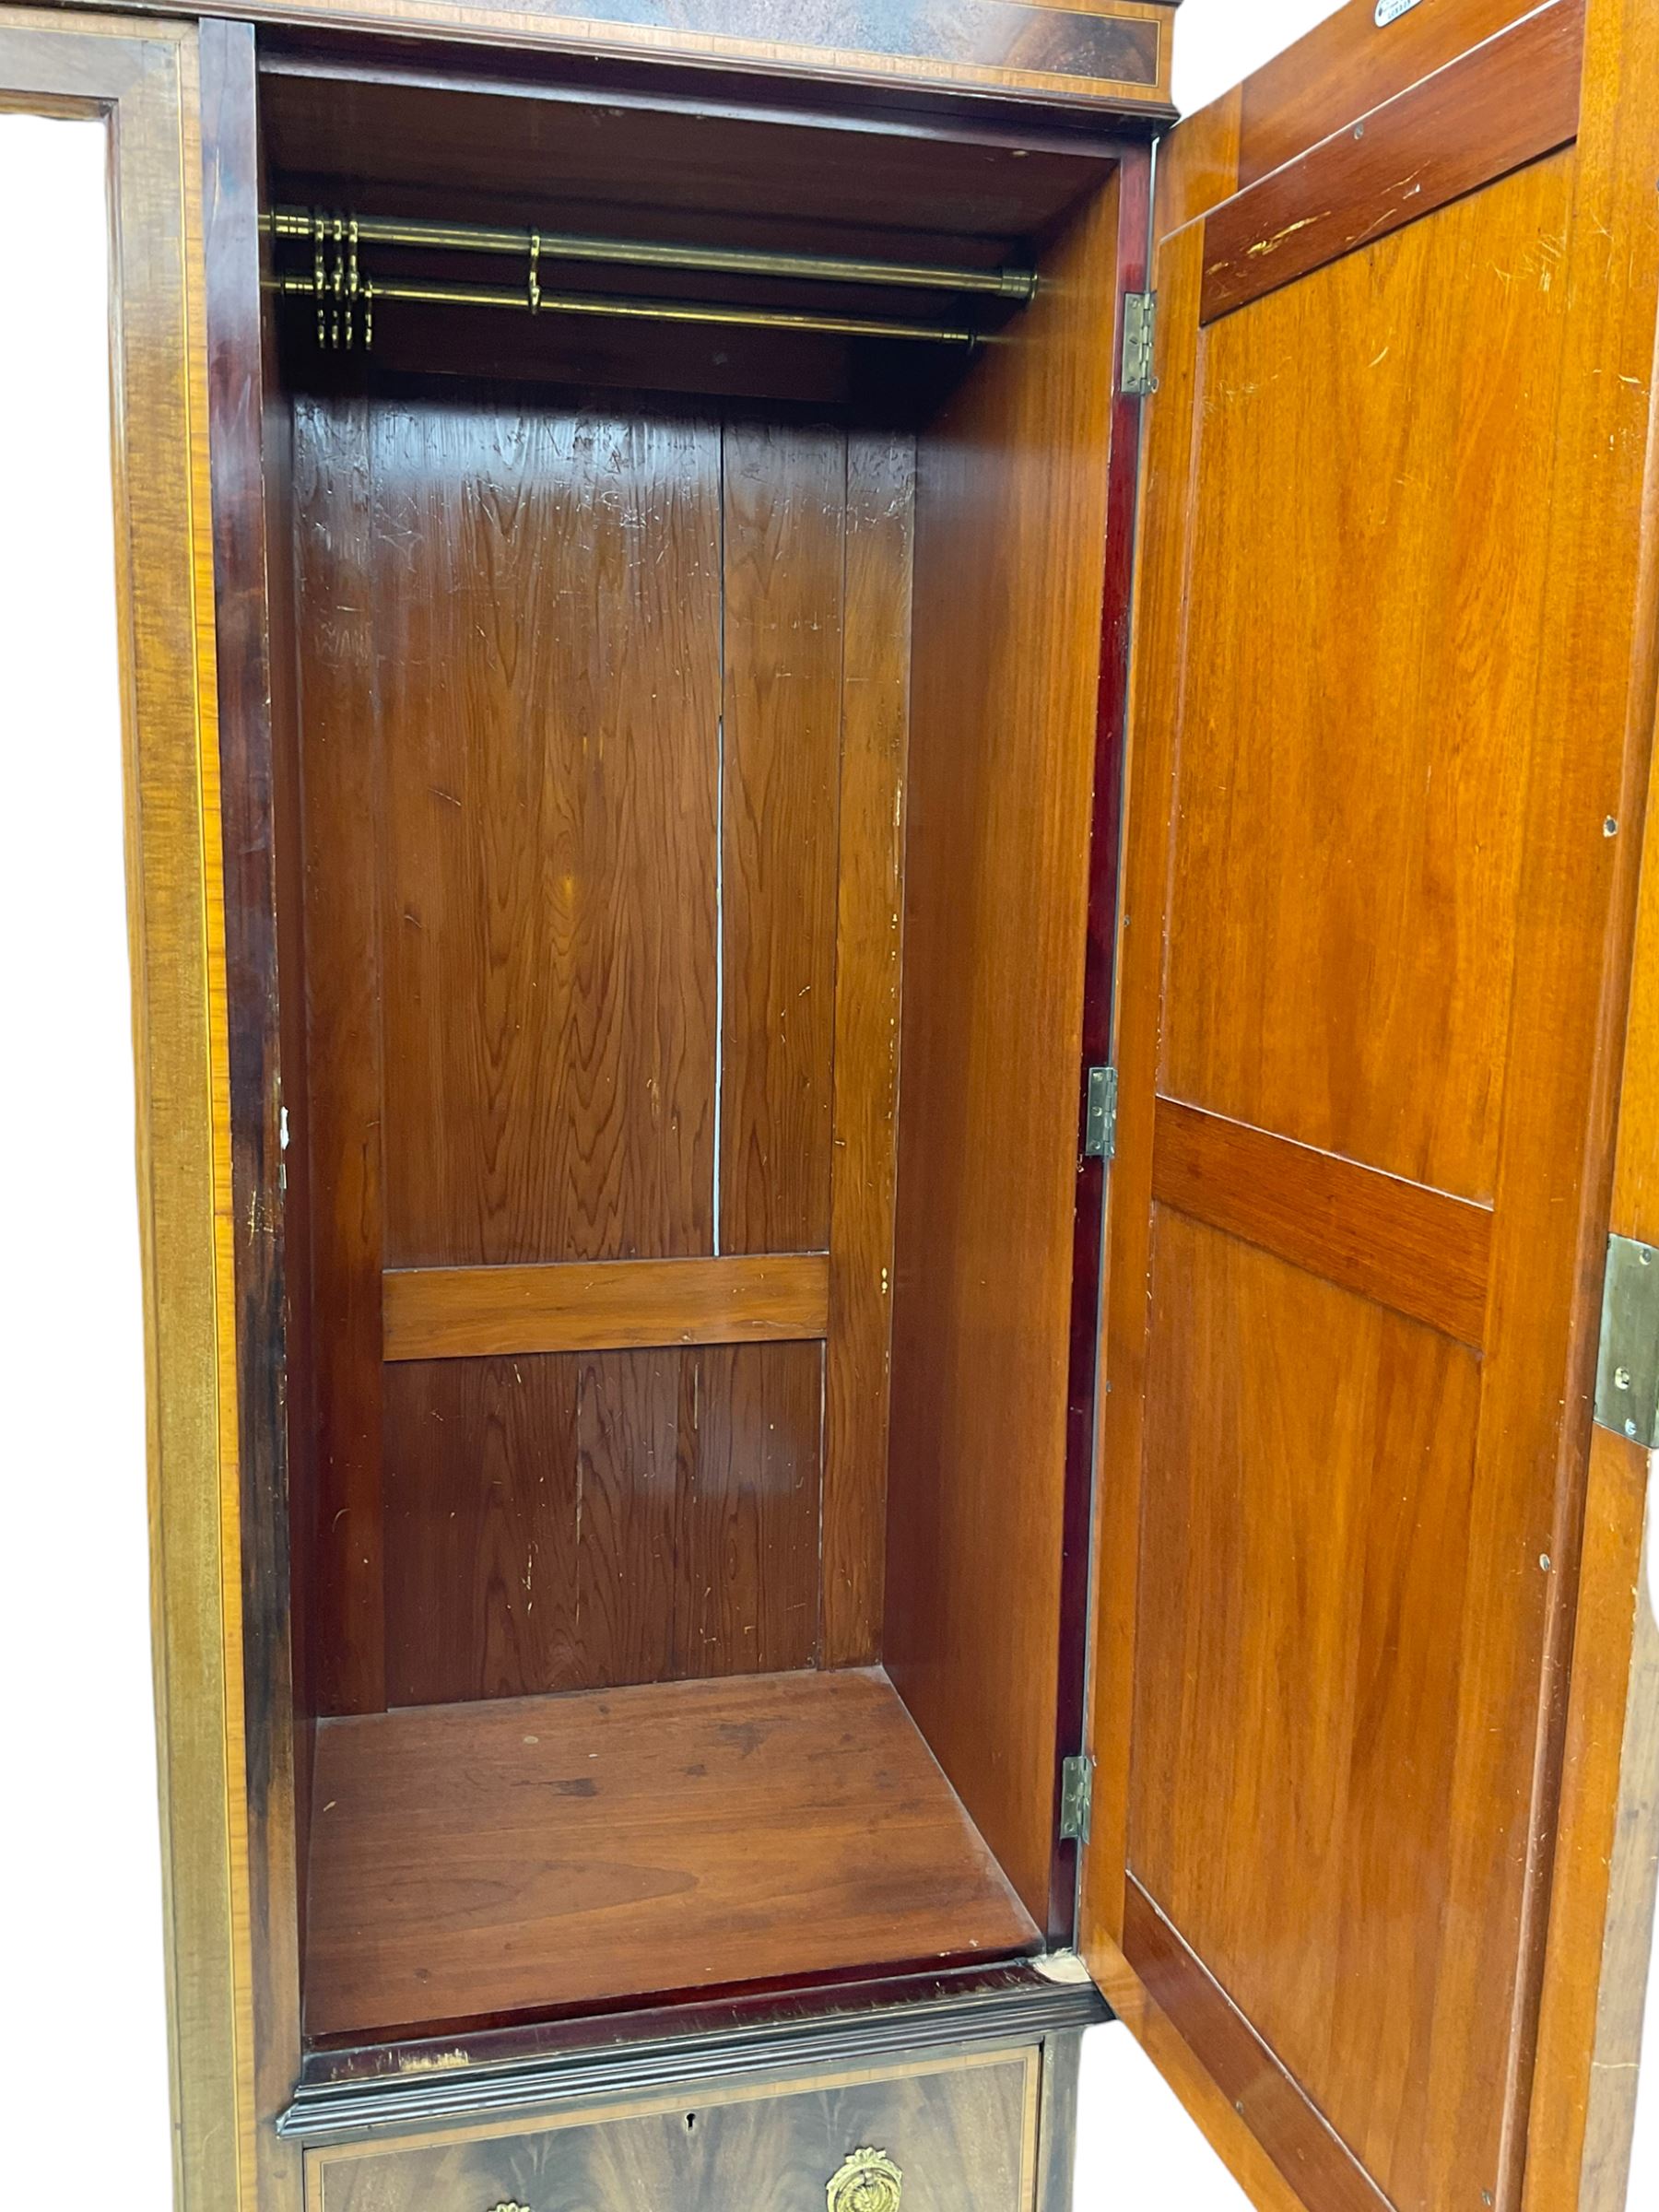 James Shoolbred & Co. London - Edwardian inlaid mahogany triple combination wardrobe - Image 4 of 7